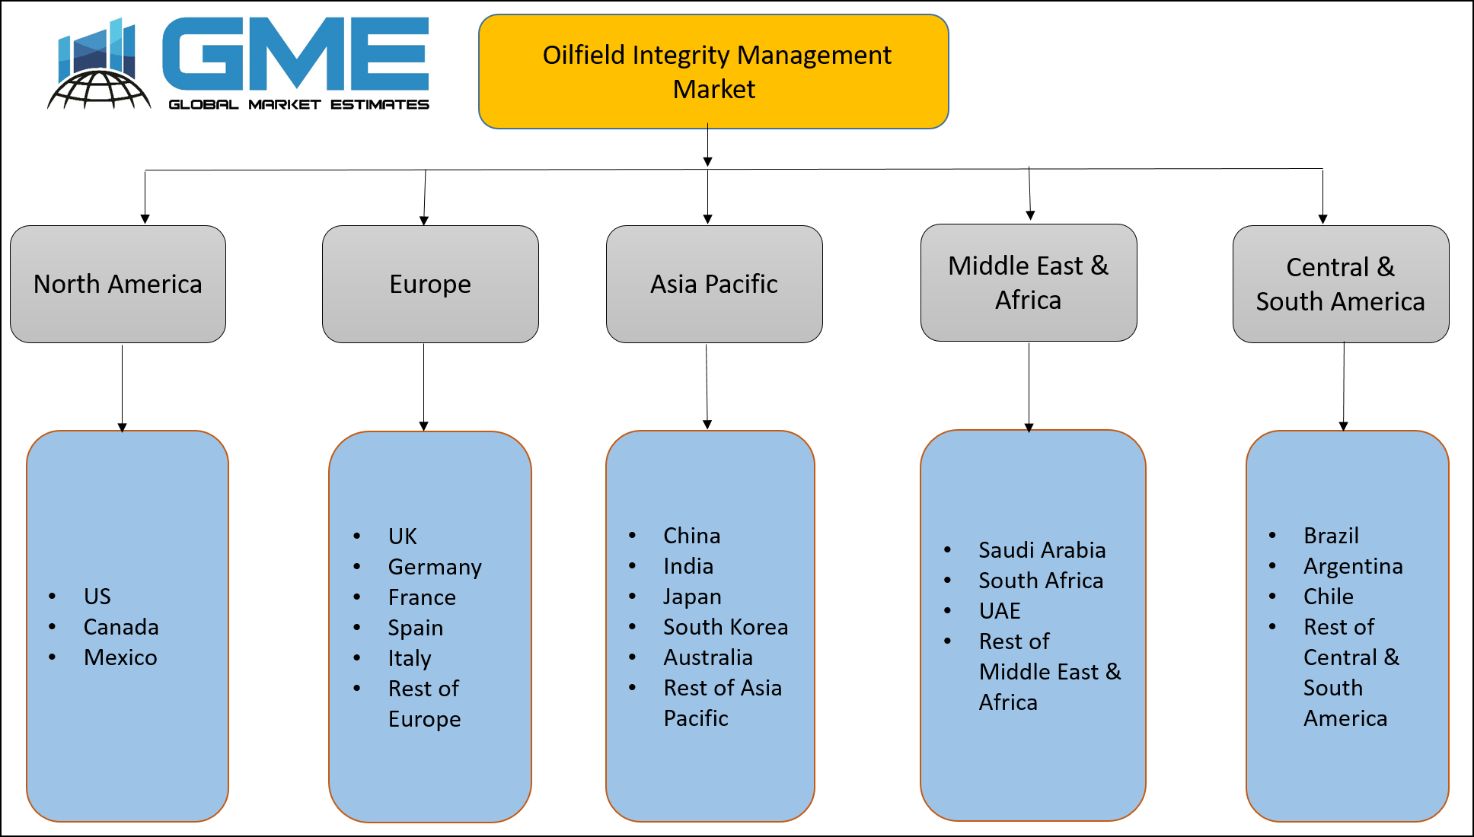 Oilfield Integrity Management Market - Regional Analysis